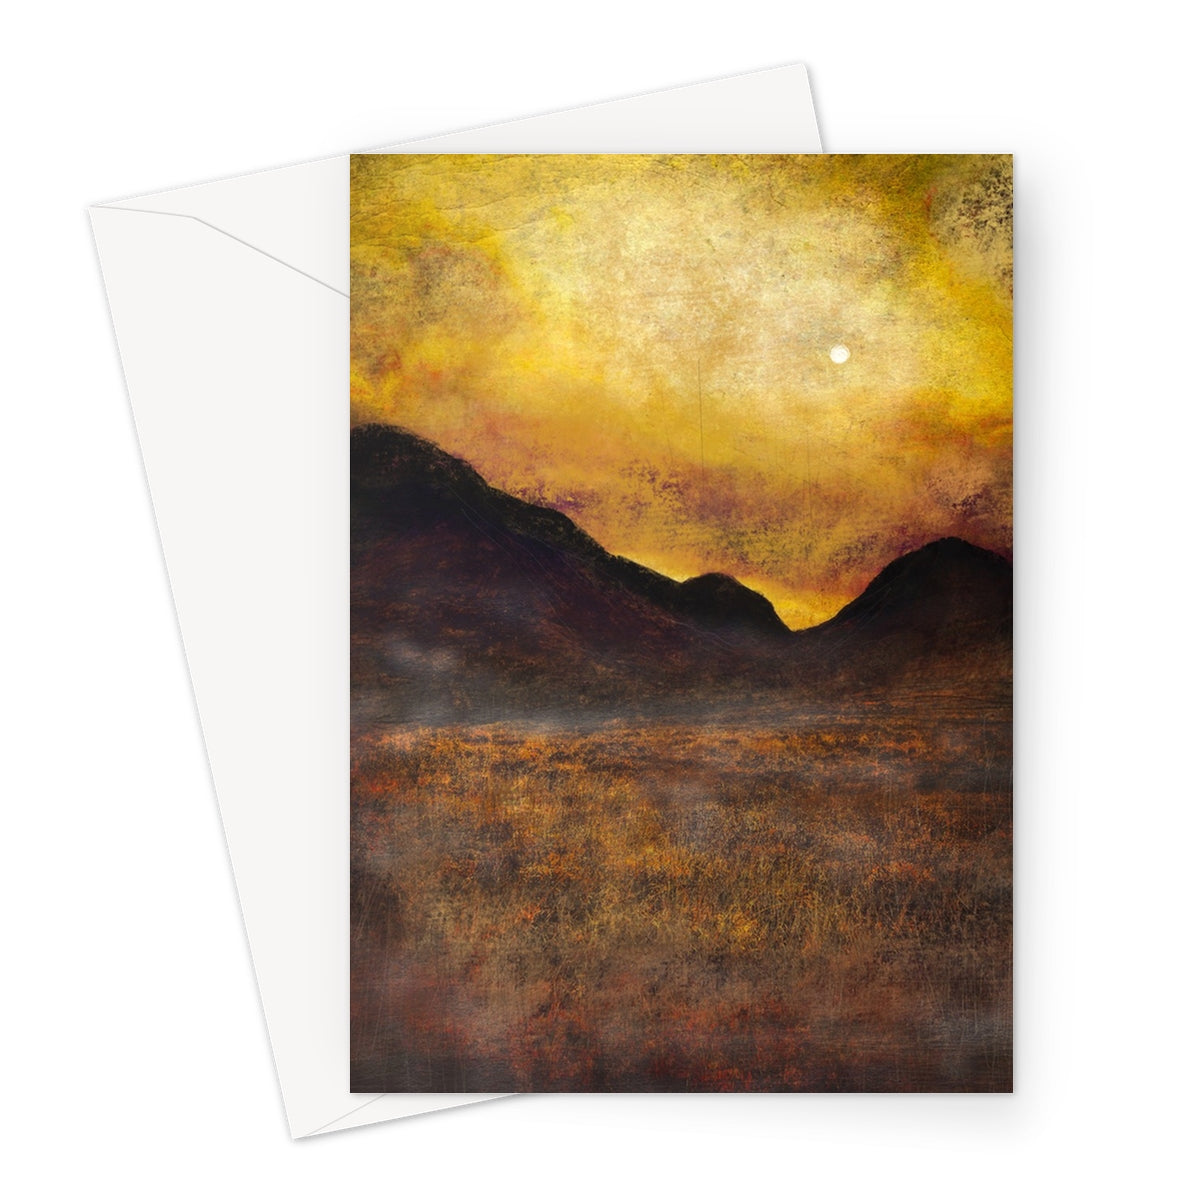 Glencoe Moonlight Art Gifts Greeting Card-Greetings Cards-Glencoe Art Gallery-A5 Portrait-10 Cards-Paintings, Prints, Homeware, Art Gifts From Scotland By Scottish Artist Kevin Hunter